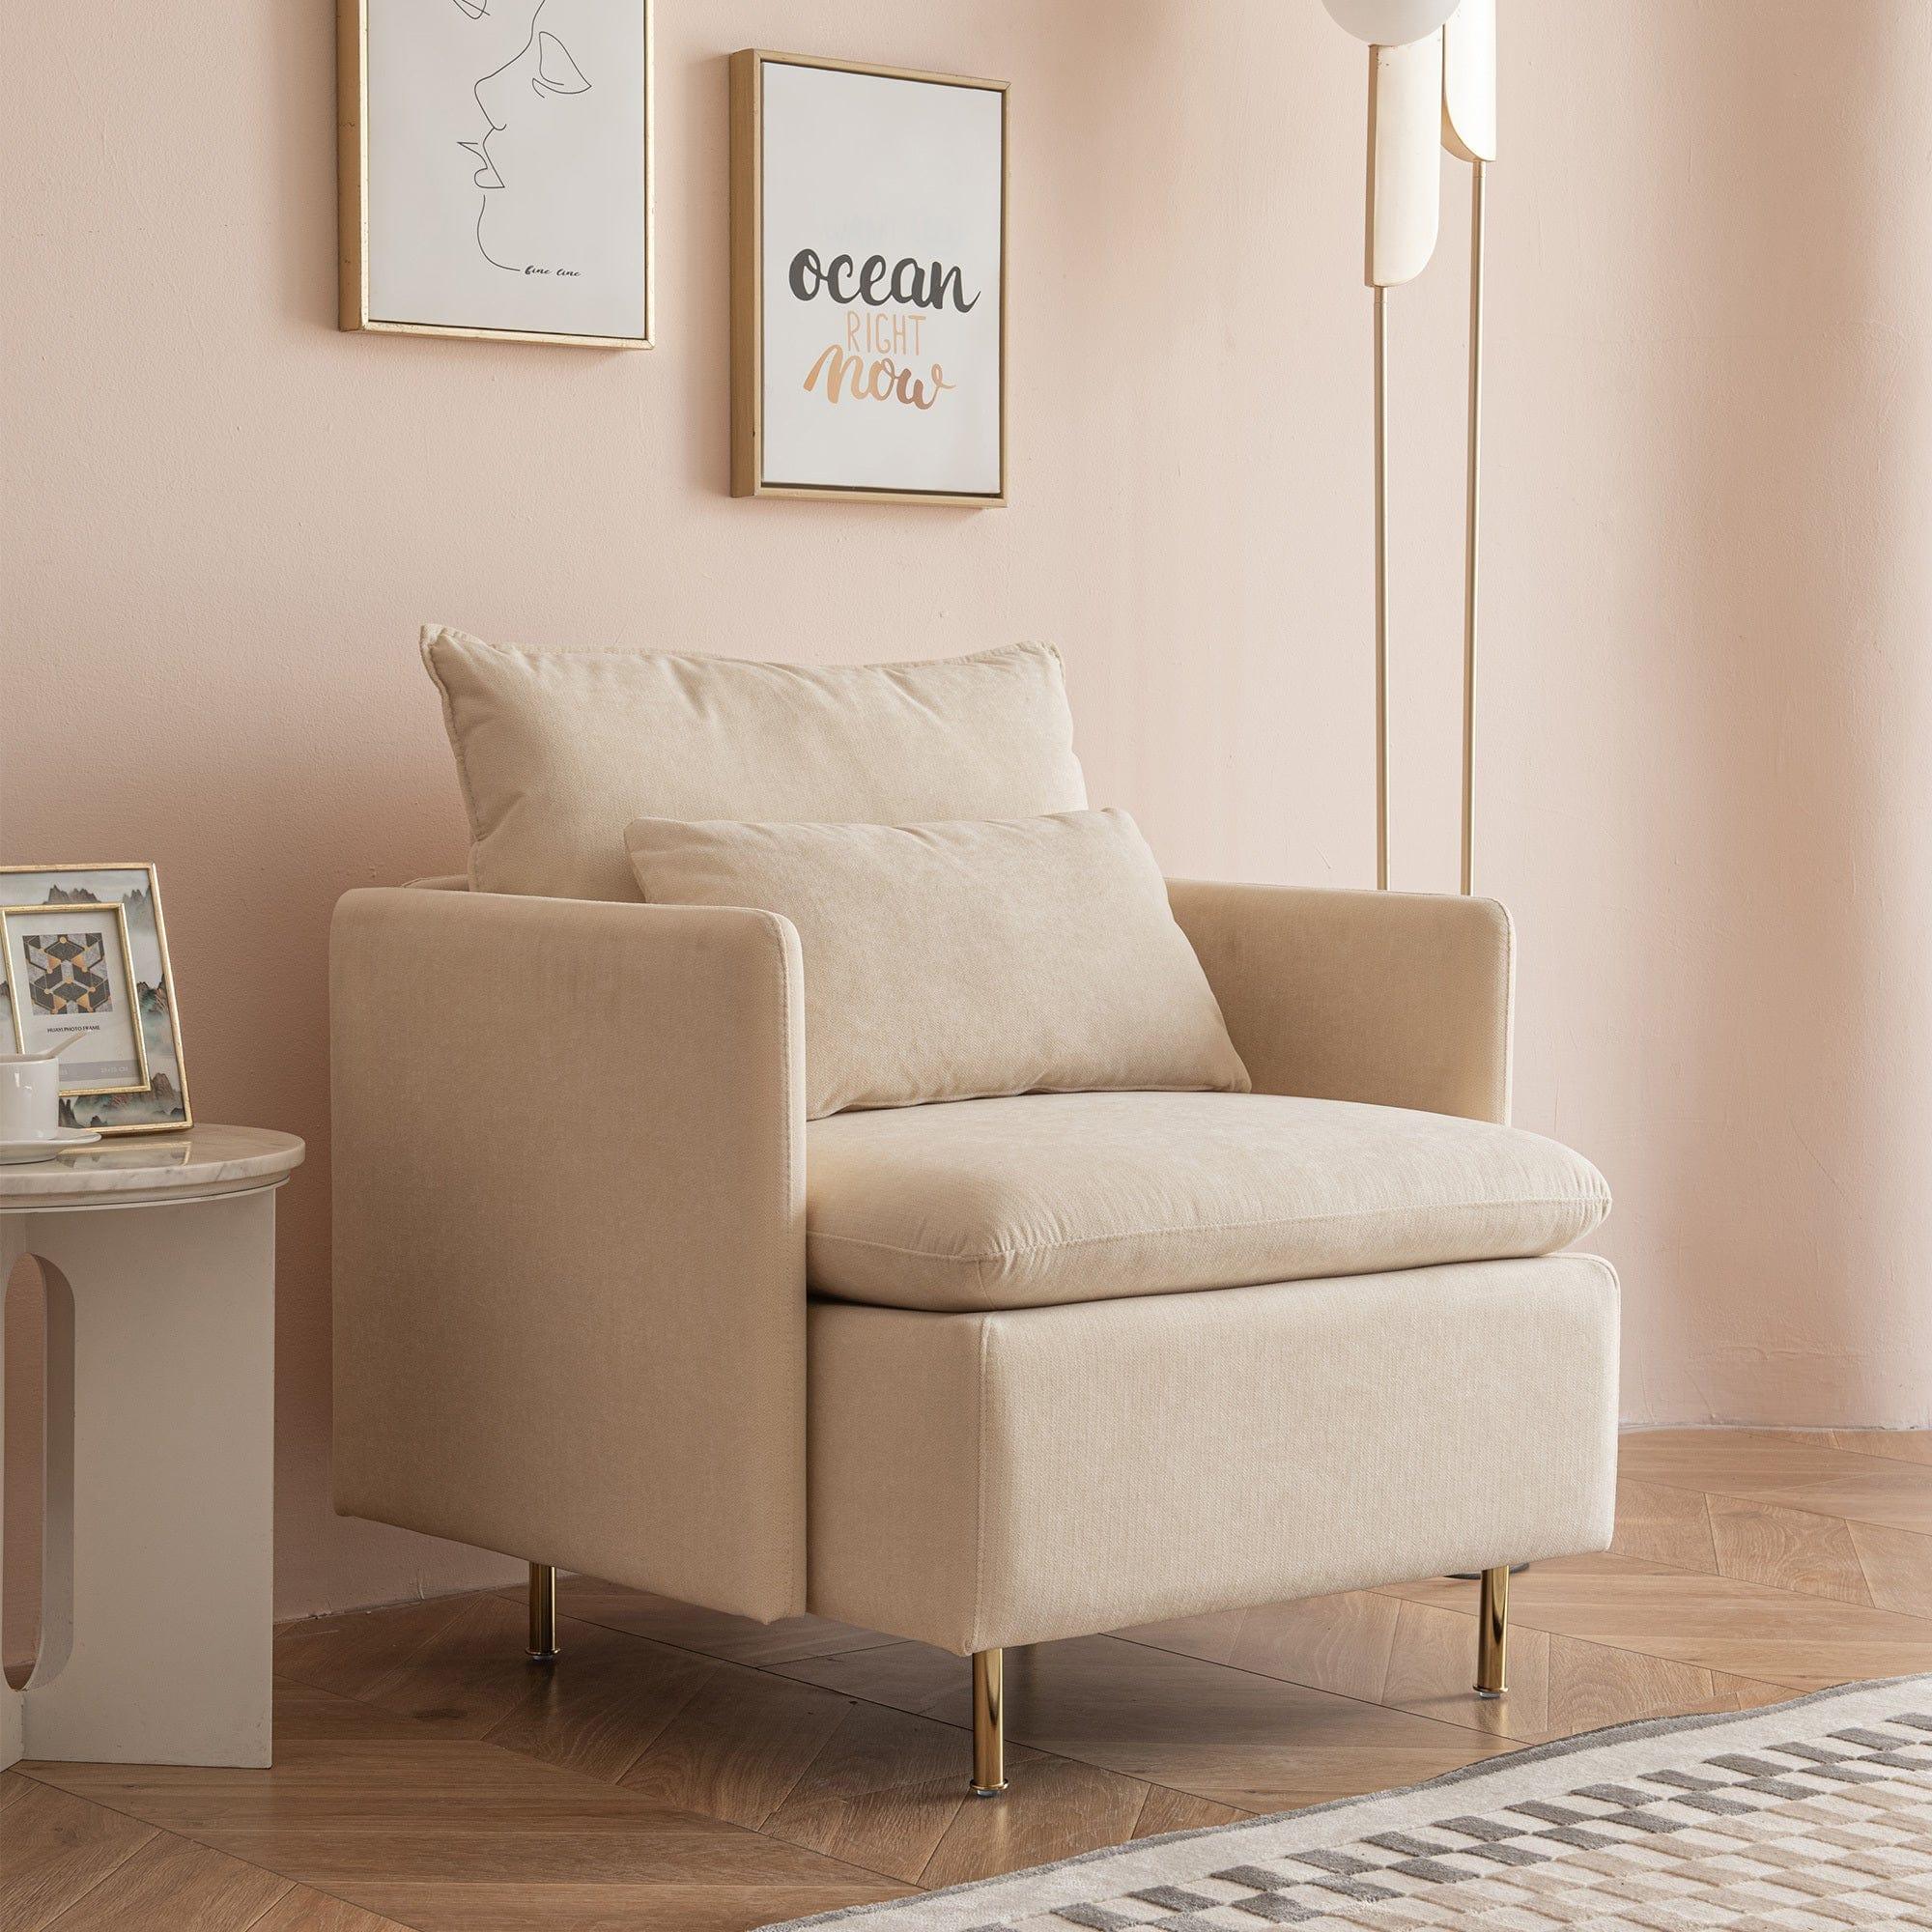 Shop Modern fabric accent armchair,upholstered single sofa chair,Beige Cotton Linen-30.7'' Mademoiselle Home Decor